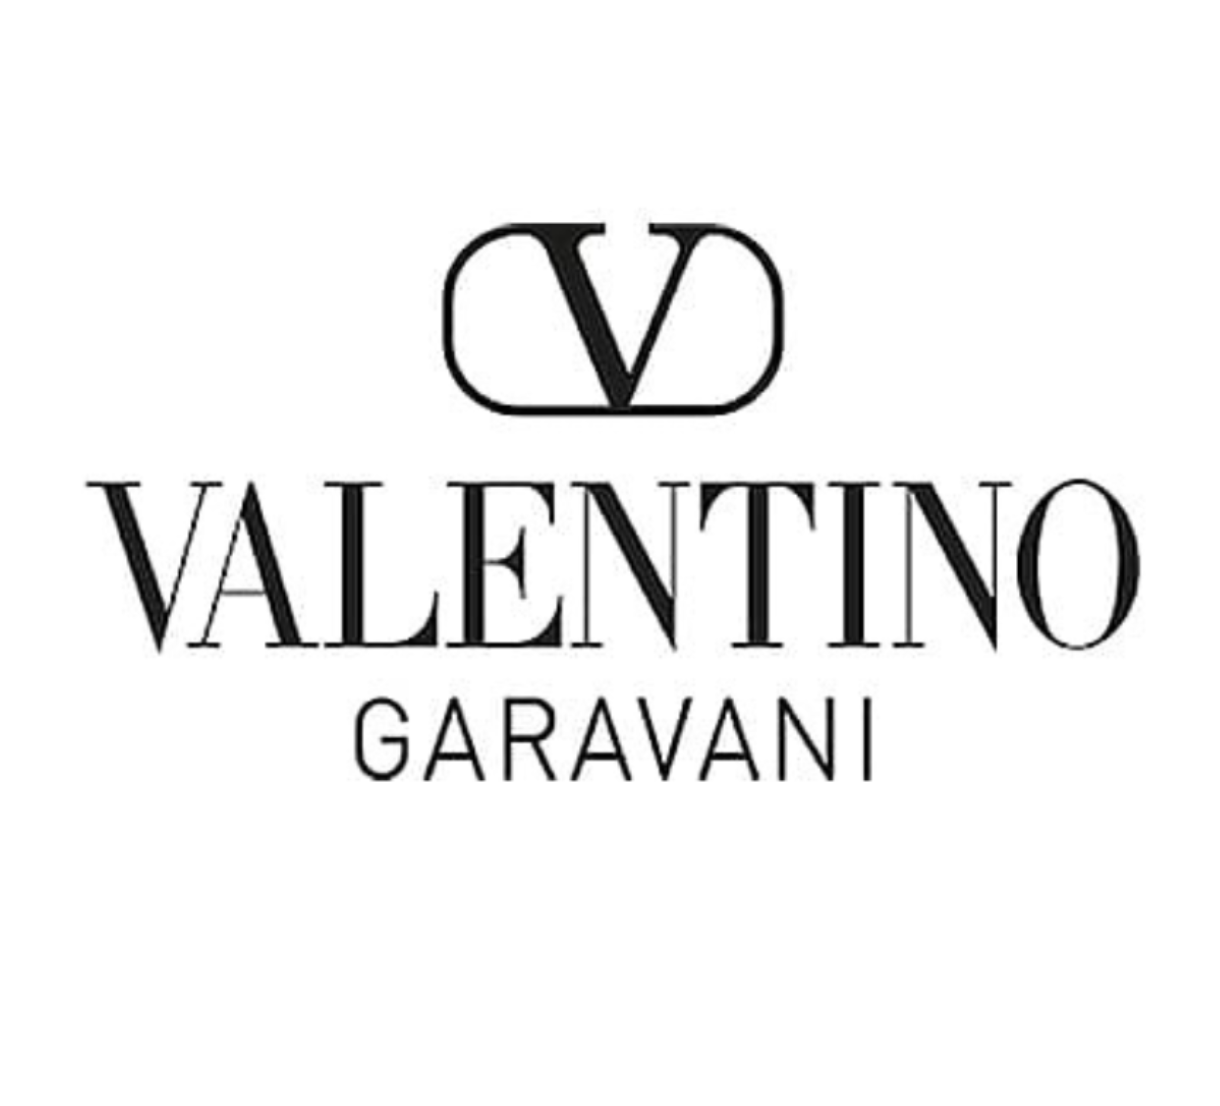 and valentino garavani